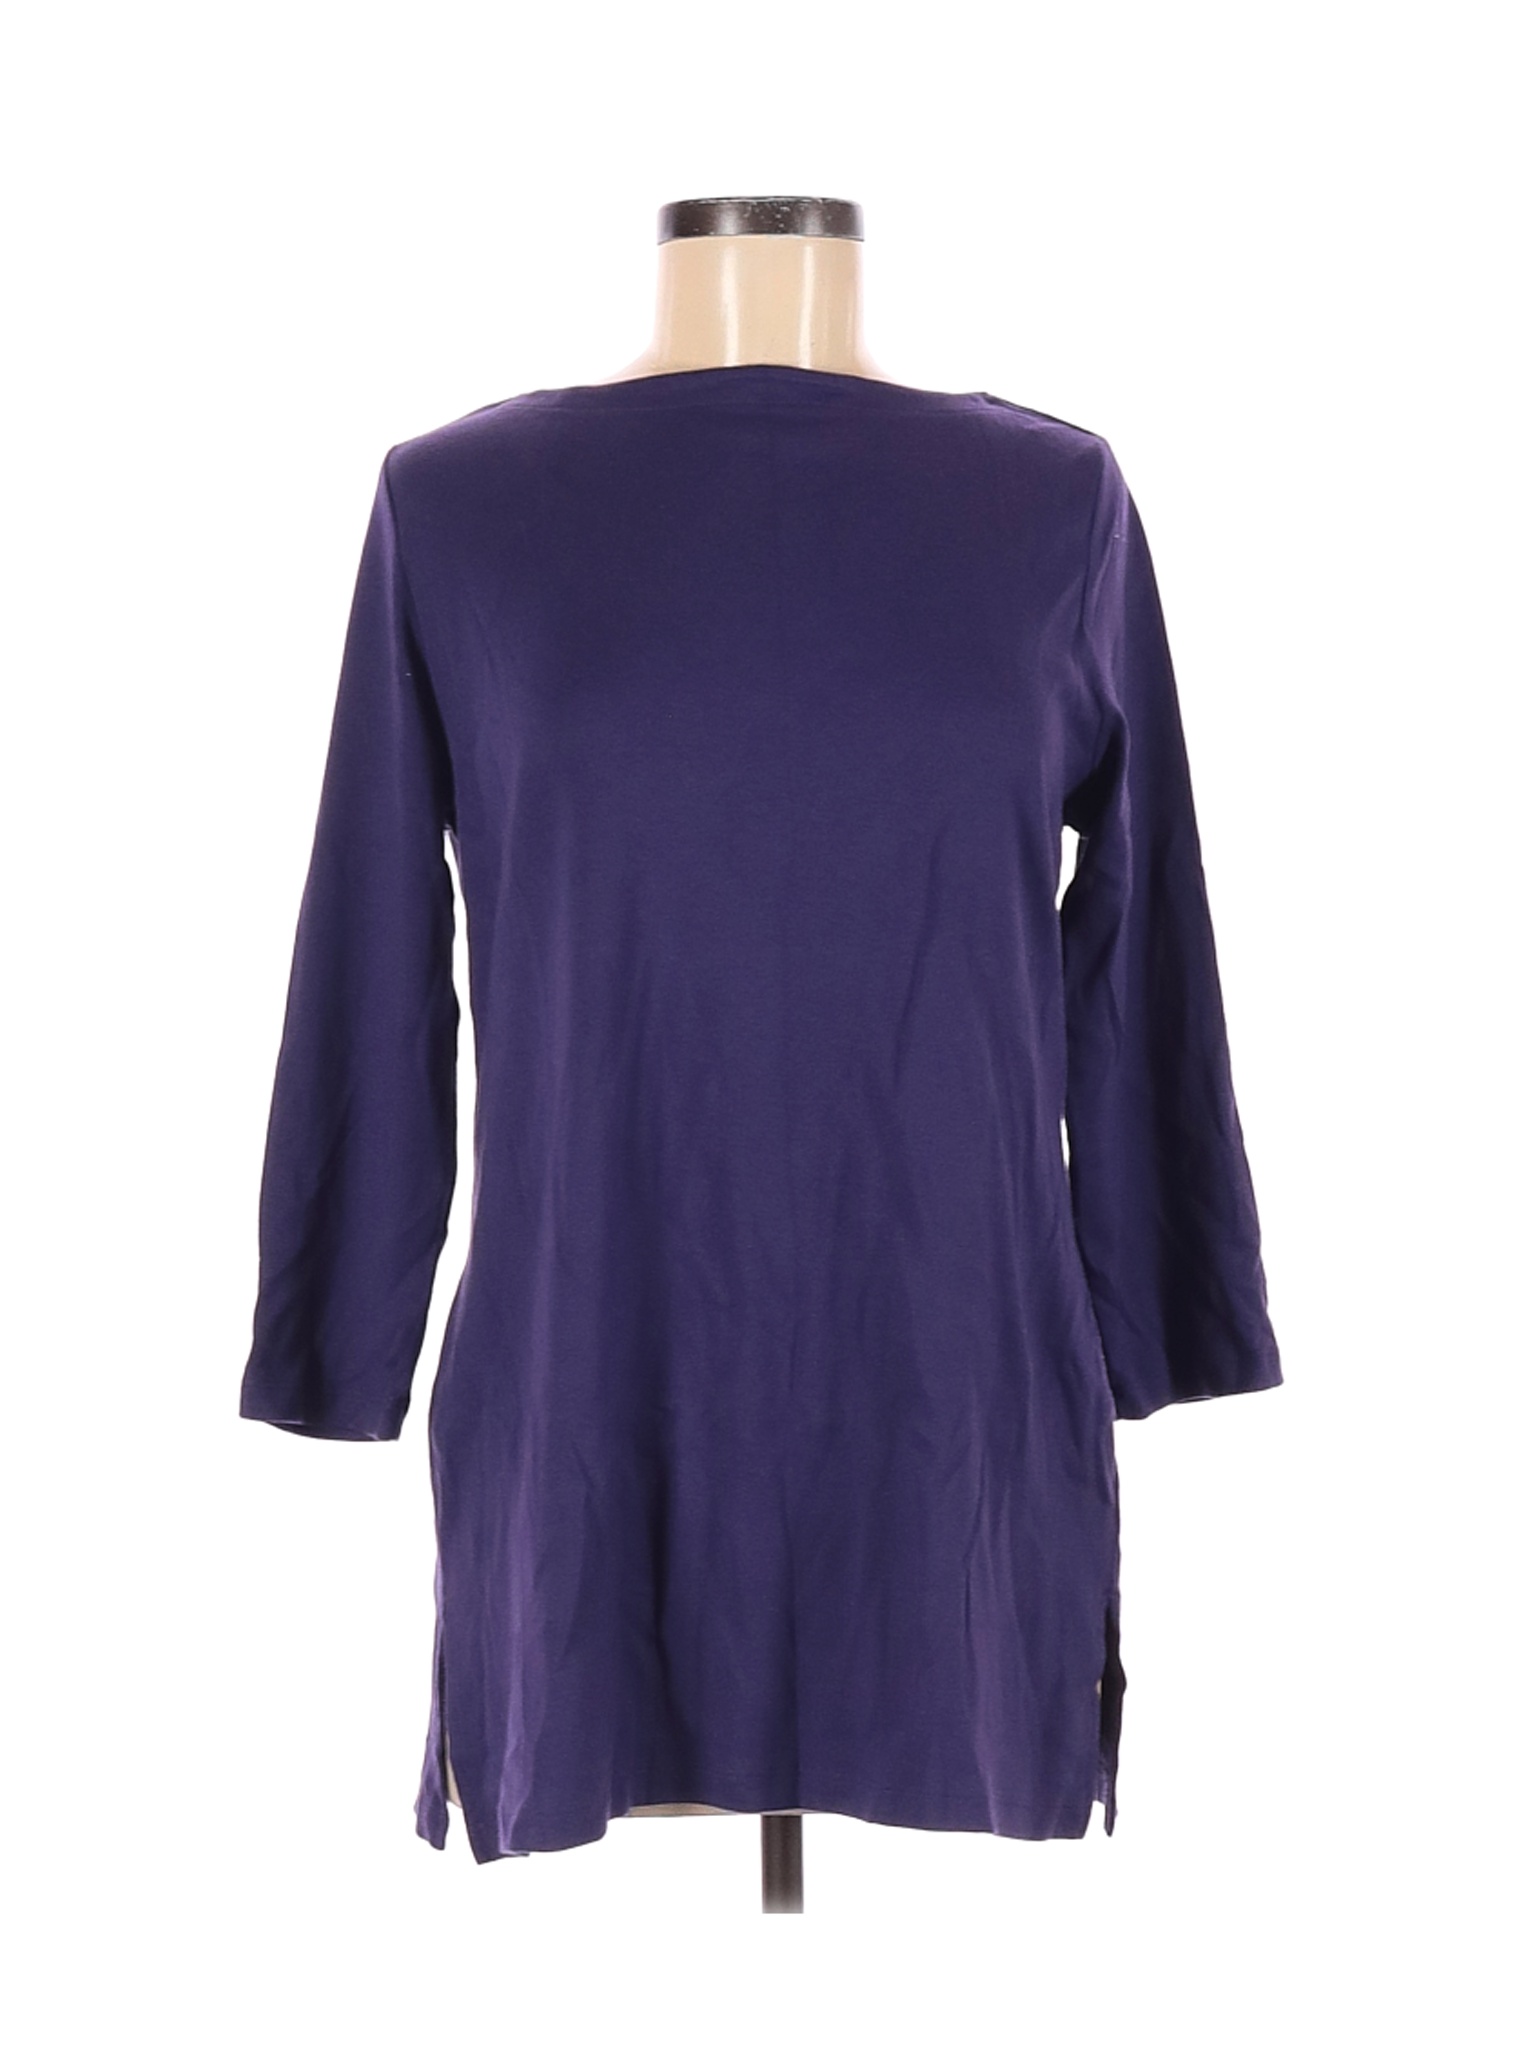 Karen Scott Women Purple 3/4 Sleeve T-Shirt M | eBay